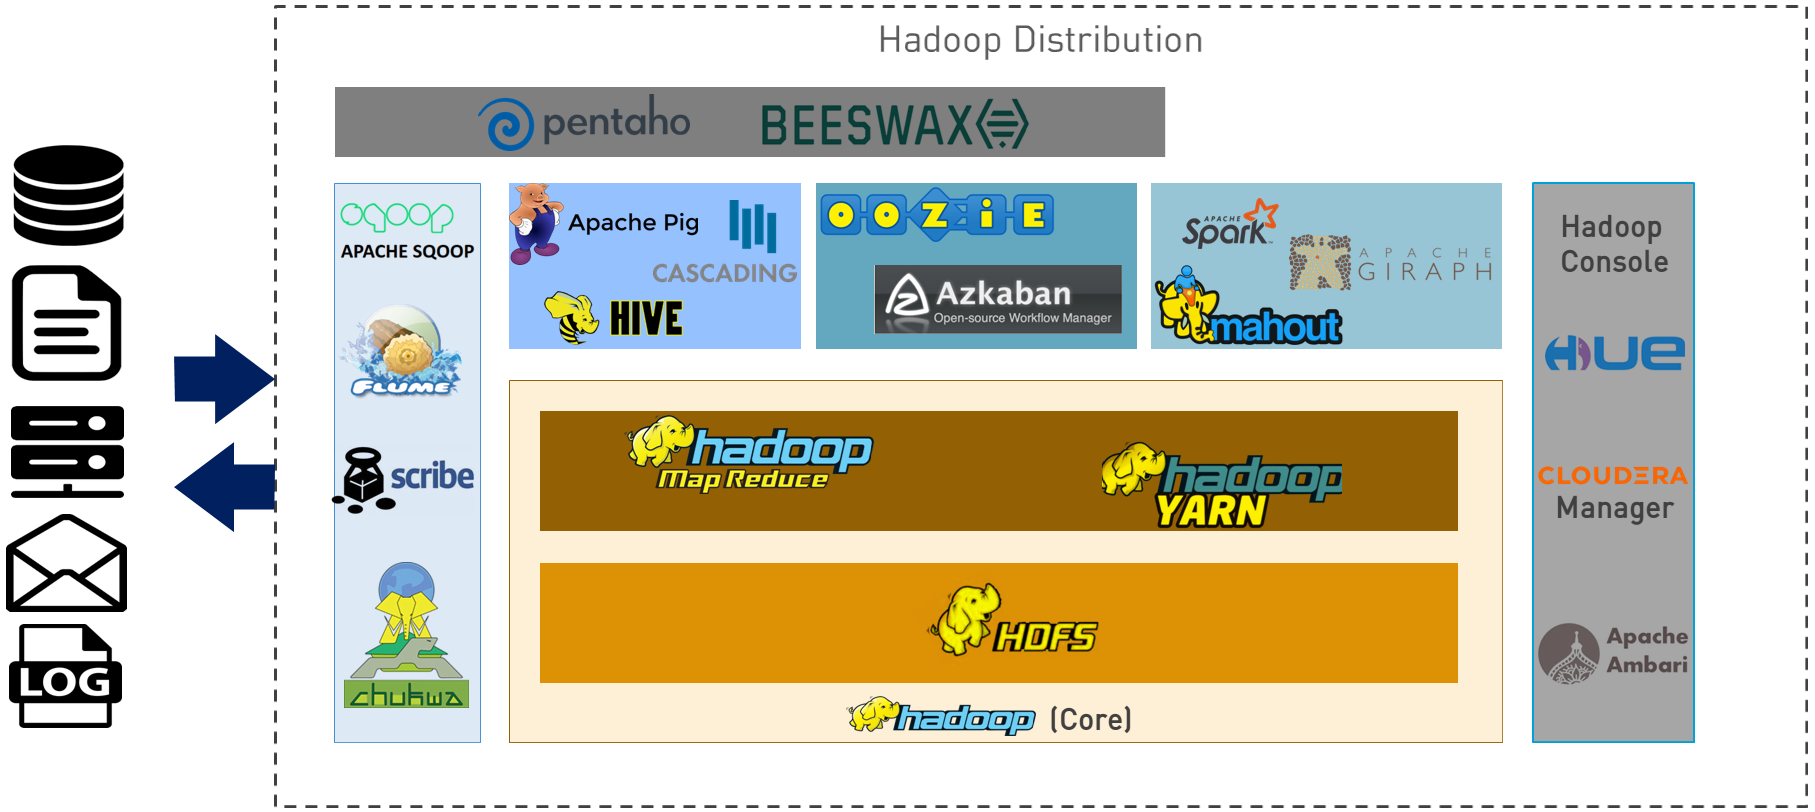 Hadoop Components